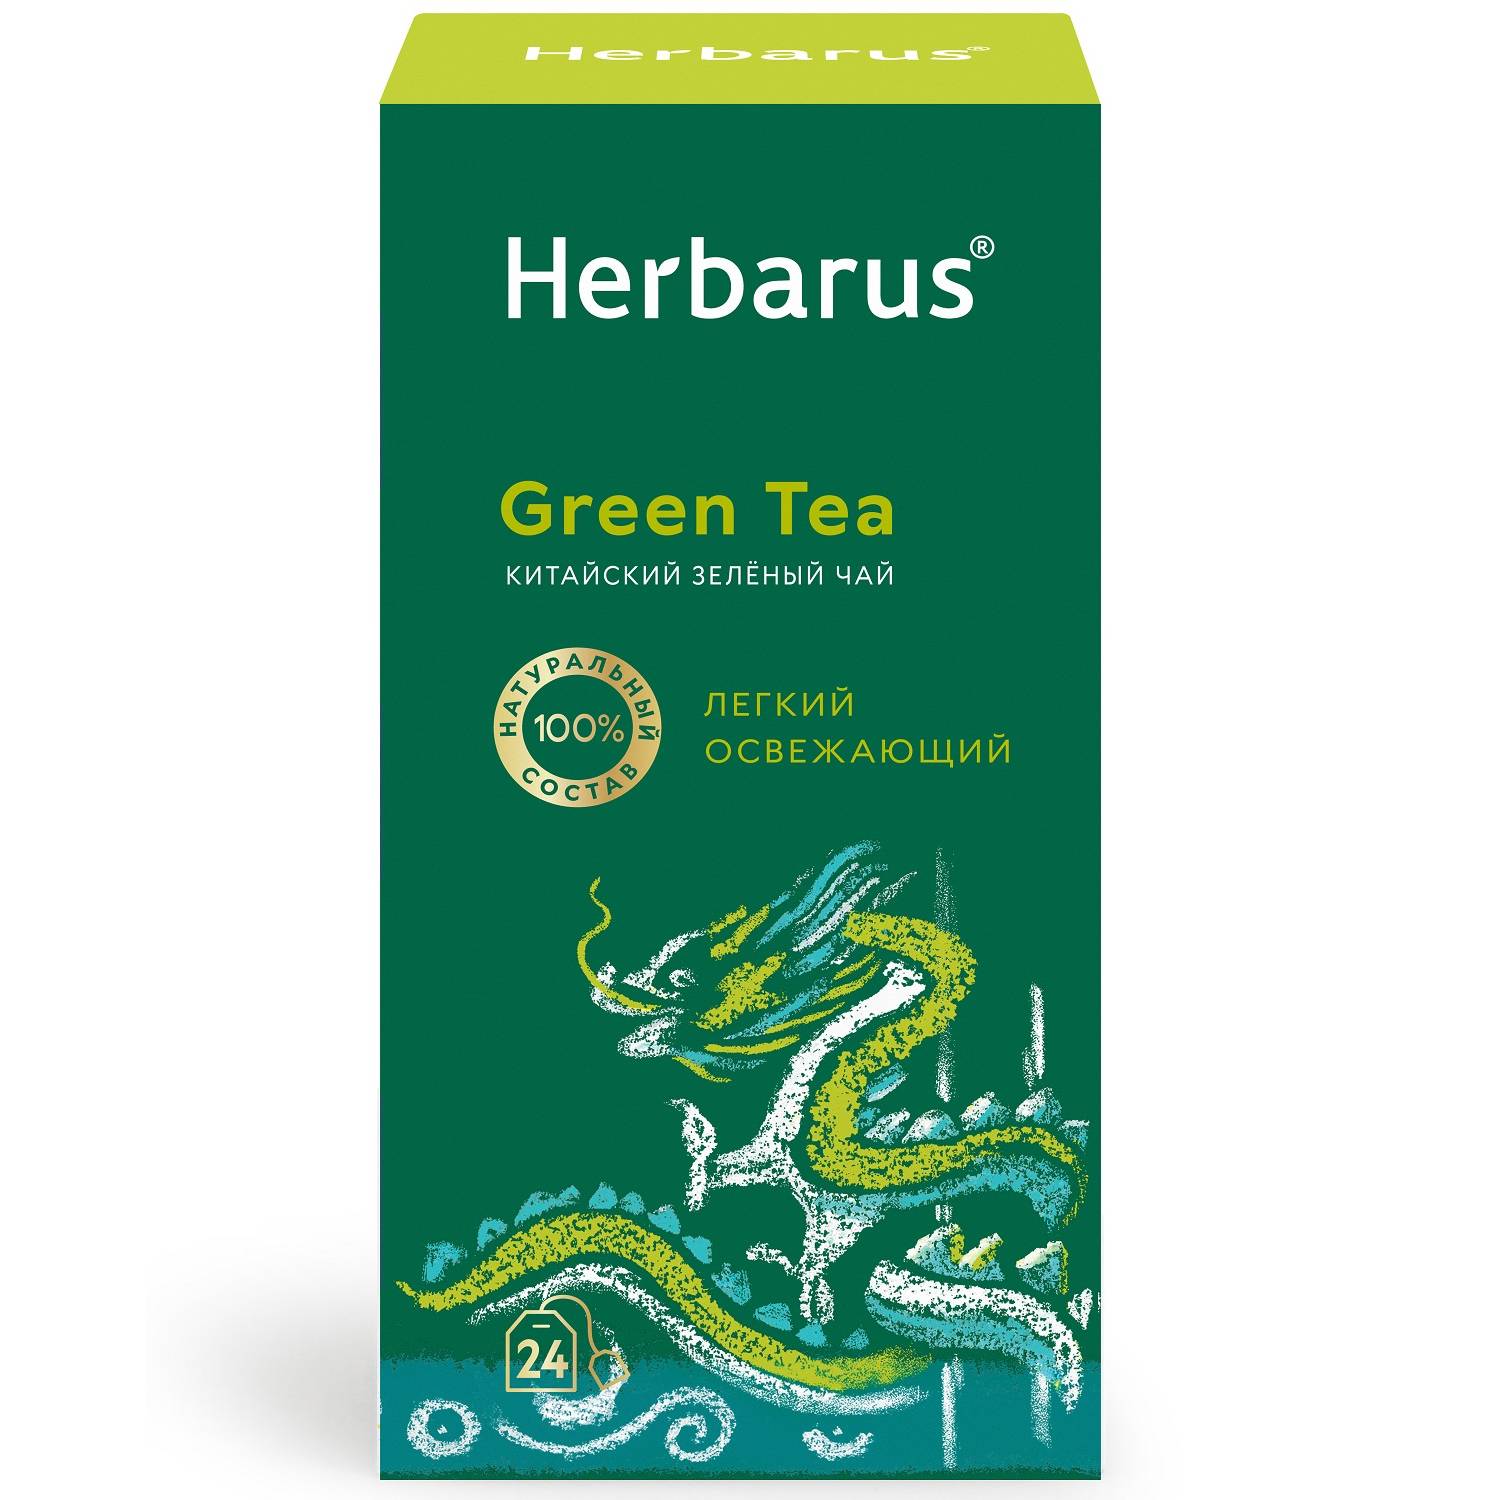 Herbarus Чай зеленый китайский Green Tea, 24 пакетика х 2 г (Herbarus, Классический чай) herbarus чай черный с добавками дикий терпкий 24 х 2 г herbarus чай с добавками